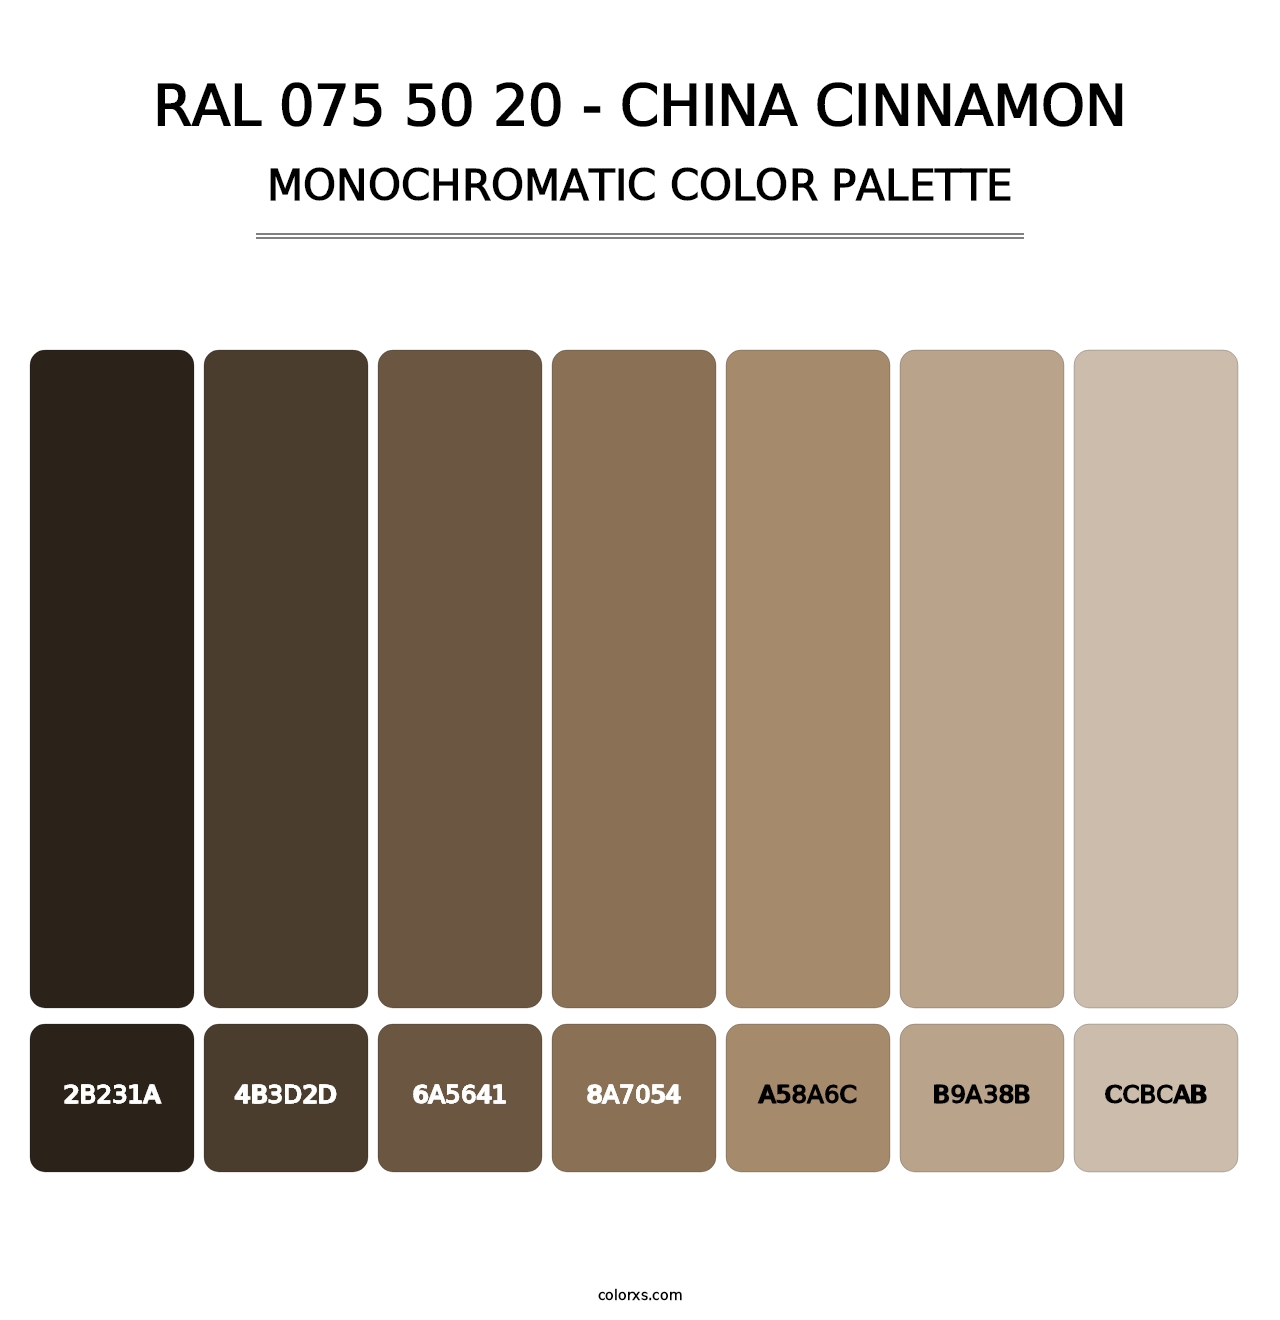 RAL 075 50 20 - China Cinnamon - Monochromatic Color Palette